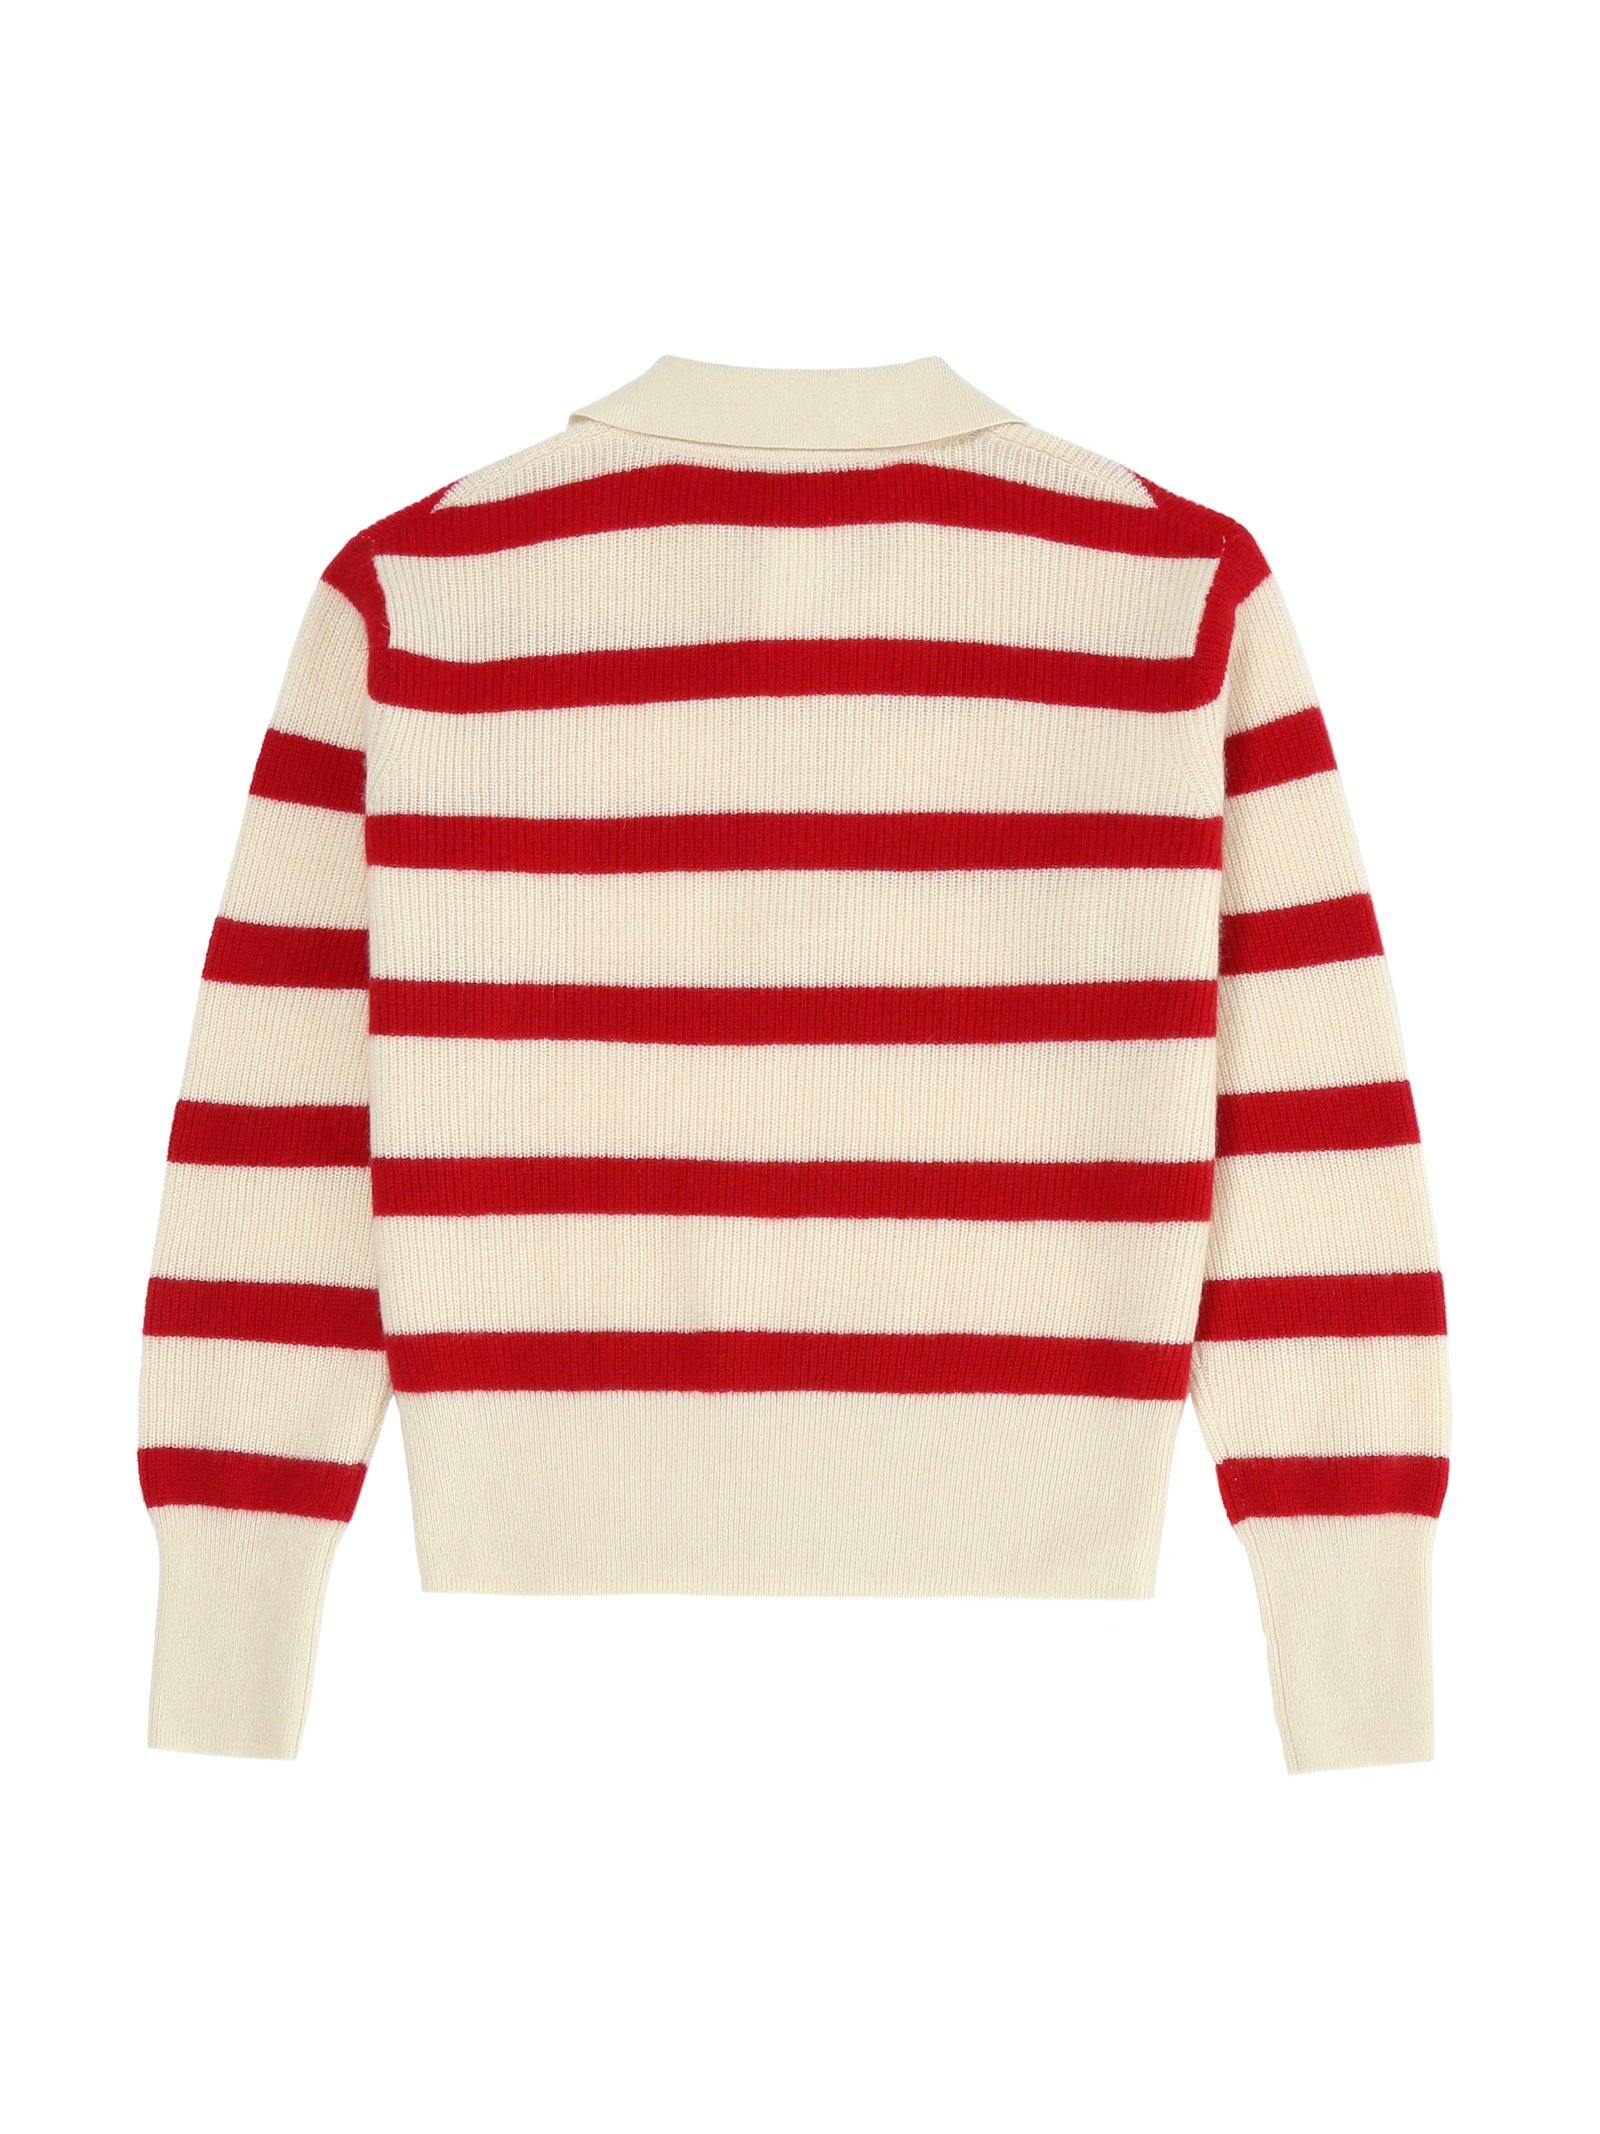 Malibu Rugby Sweater